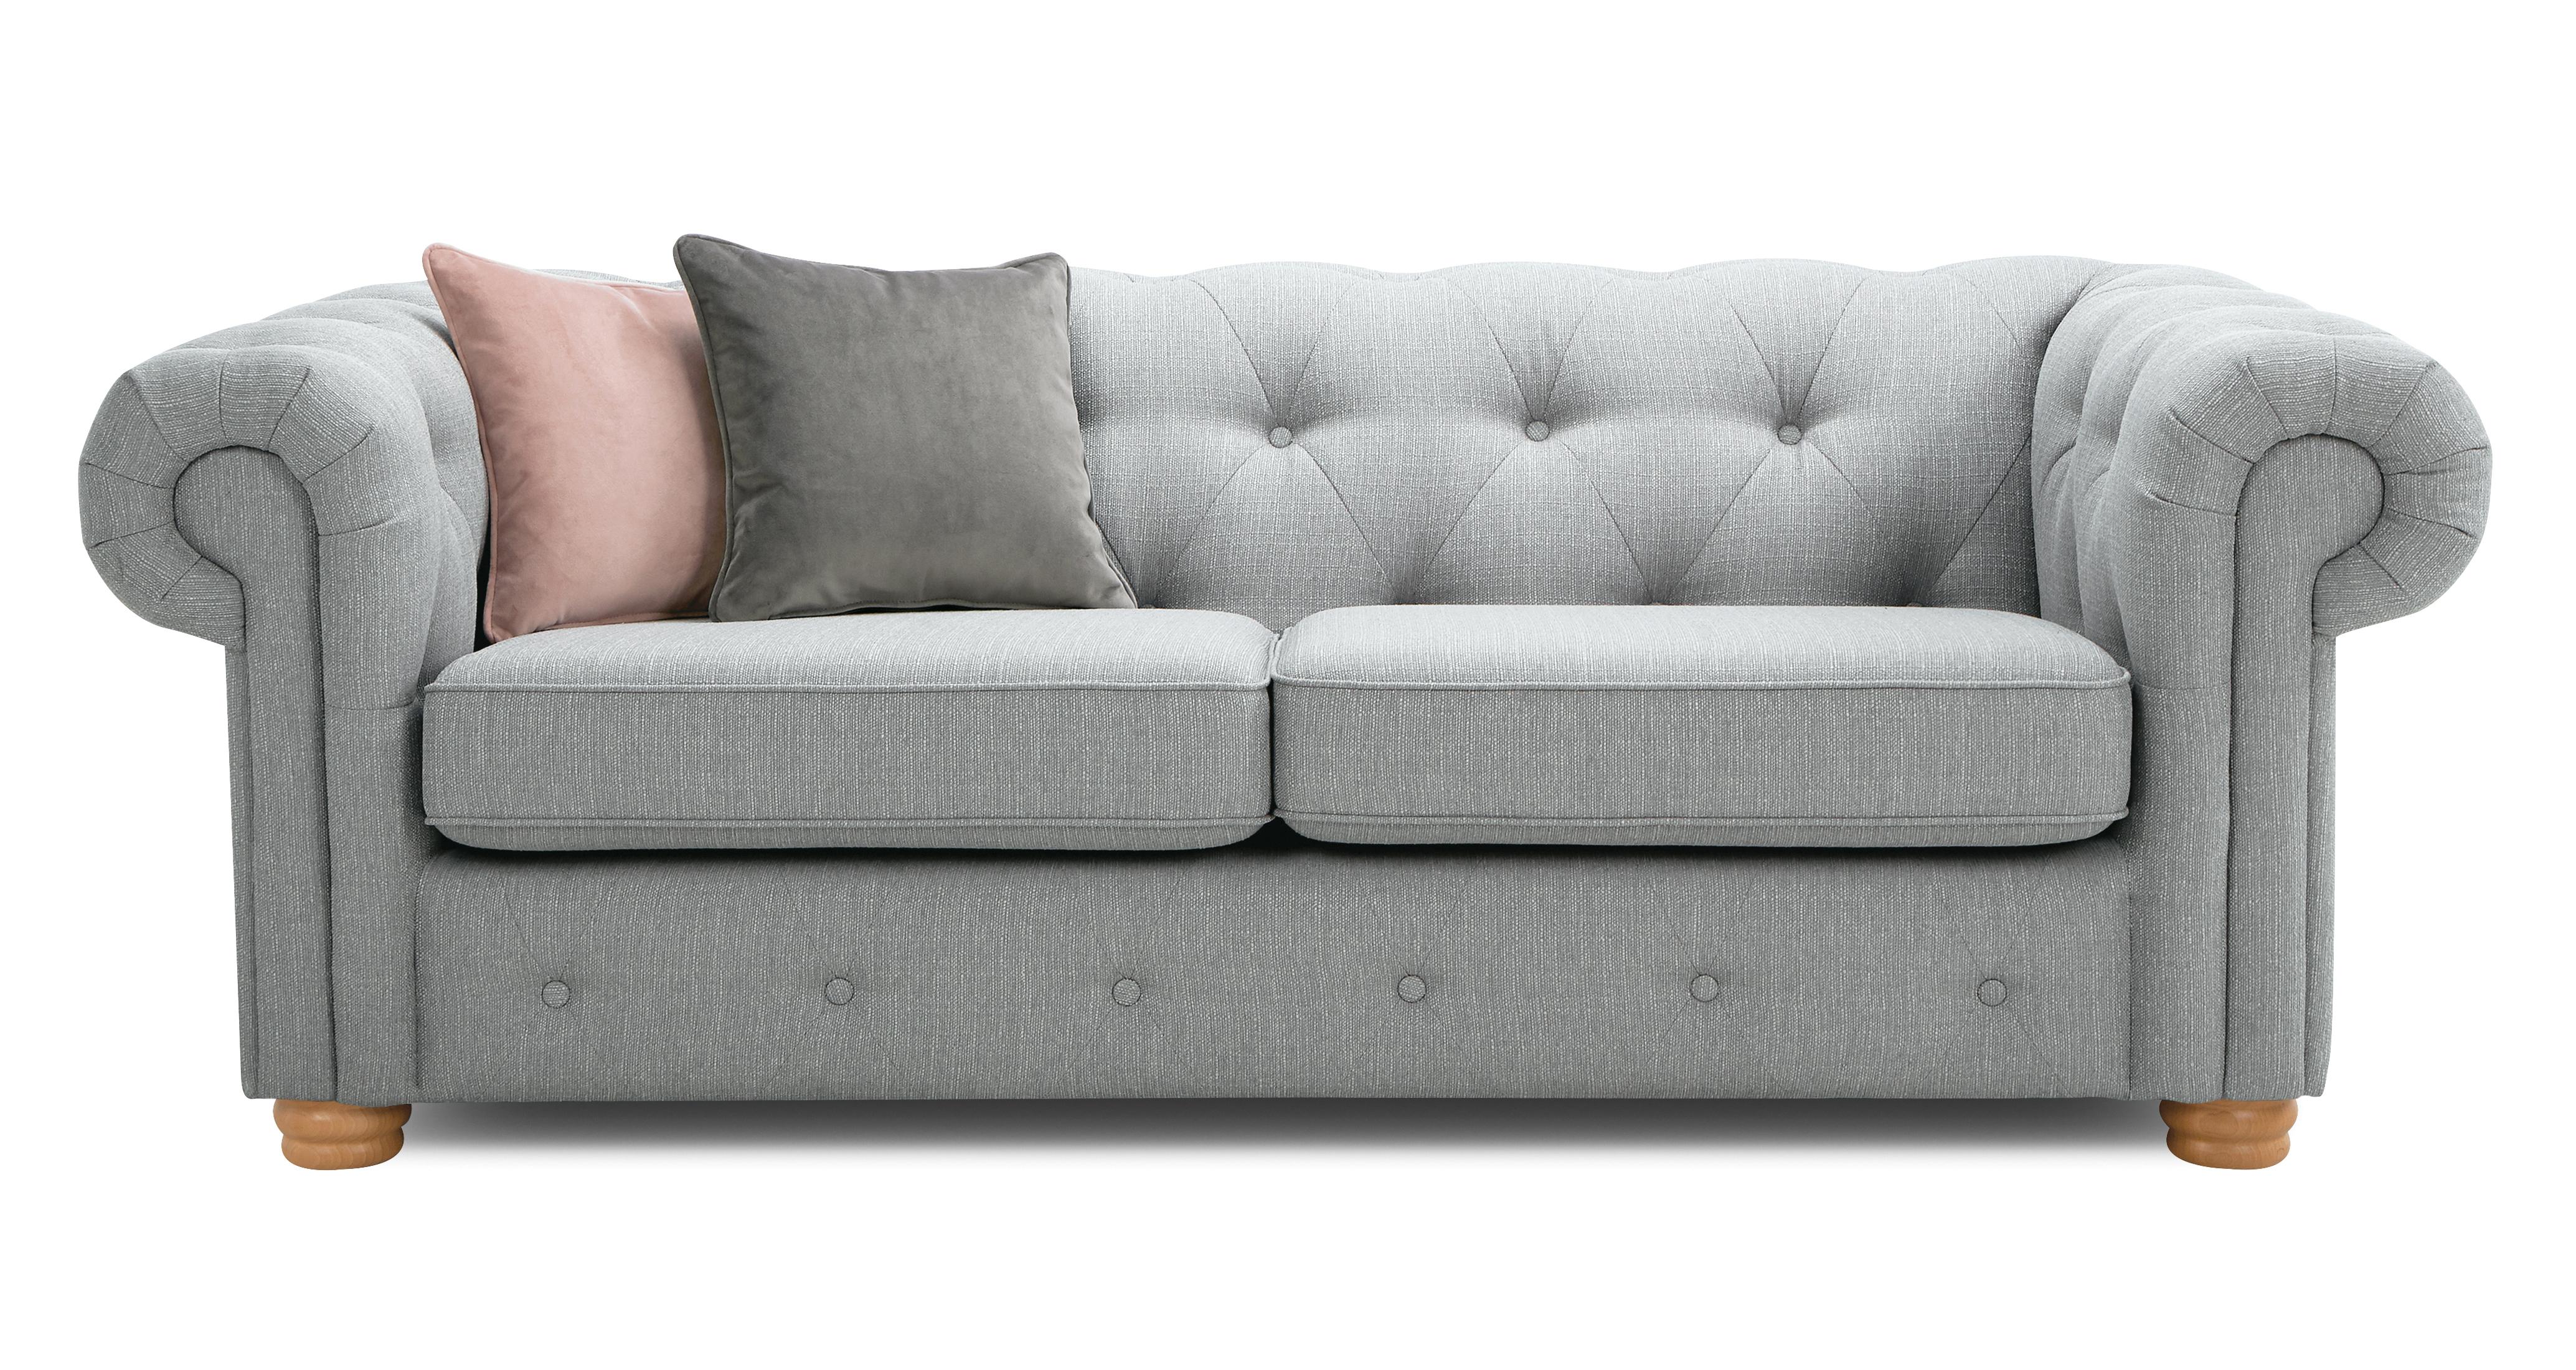 sofa beds on finance bad credit